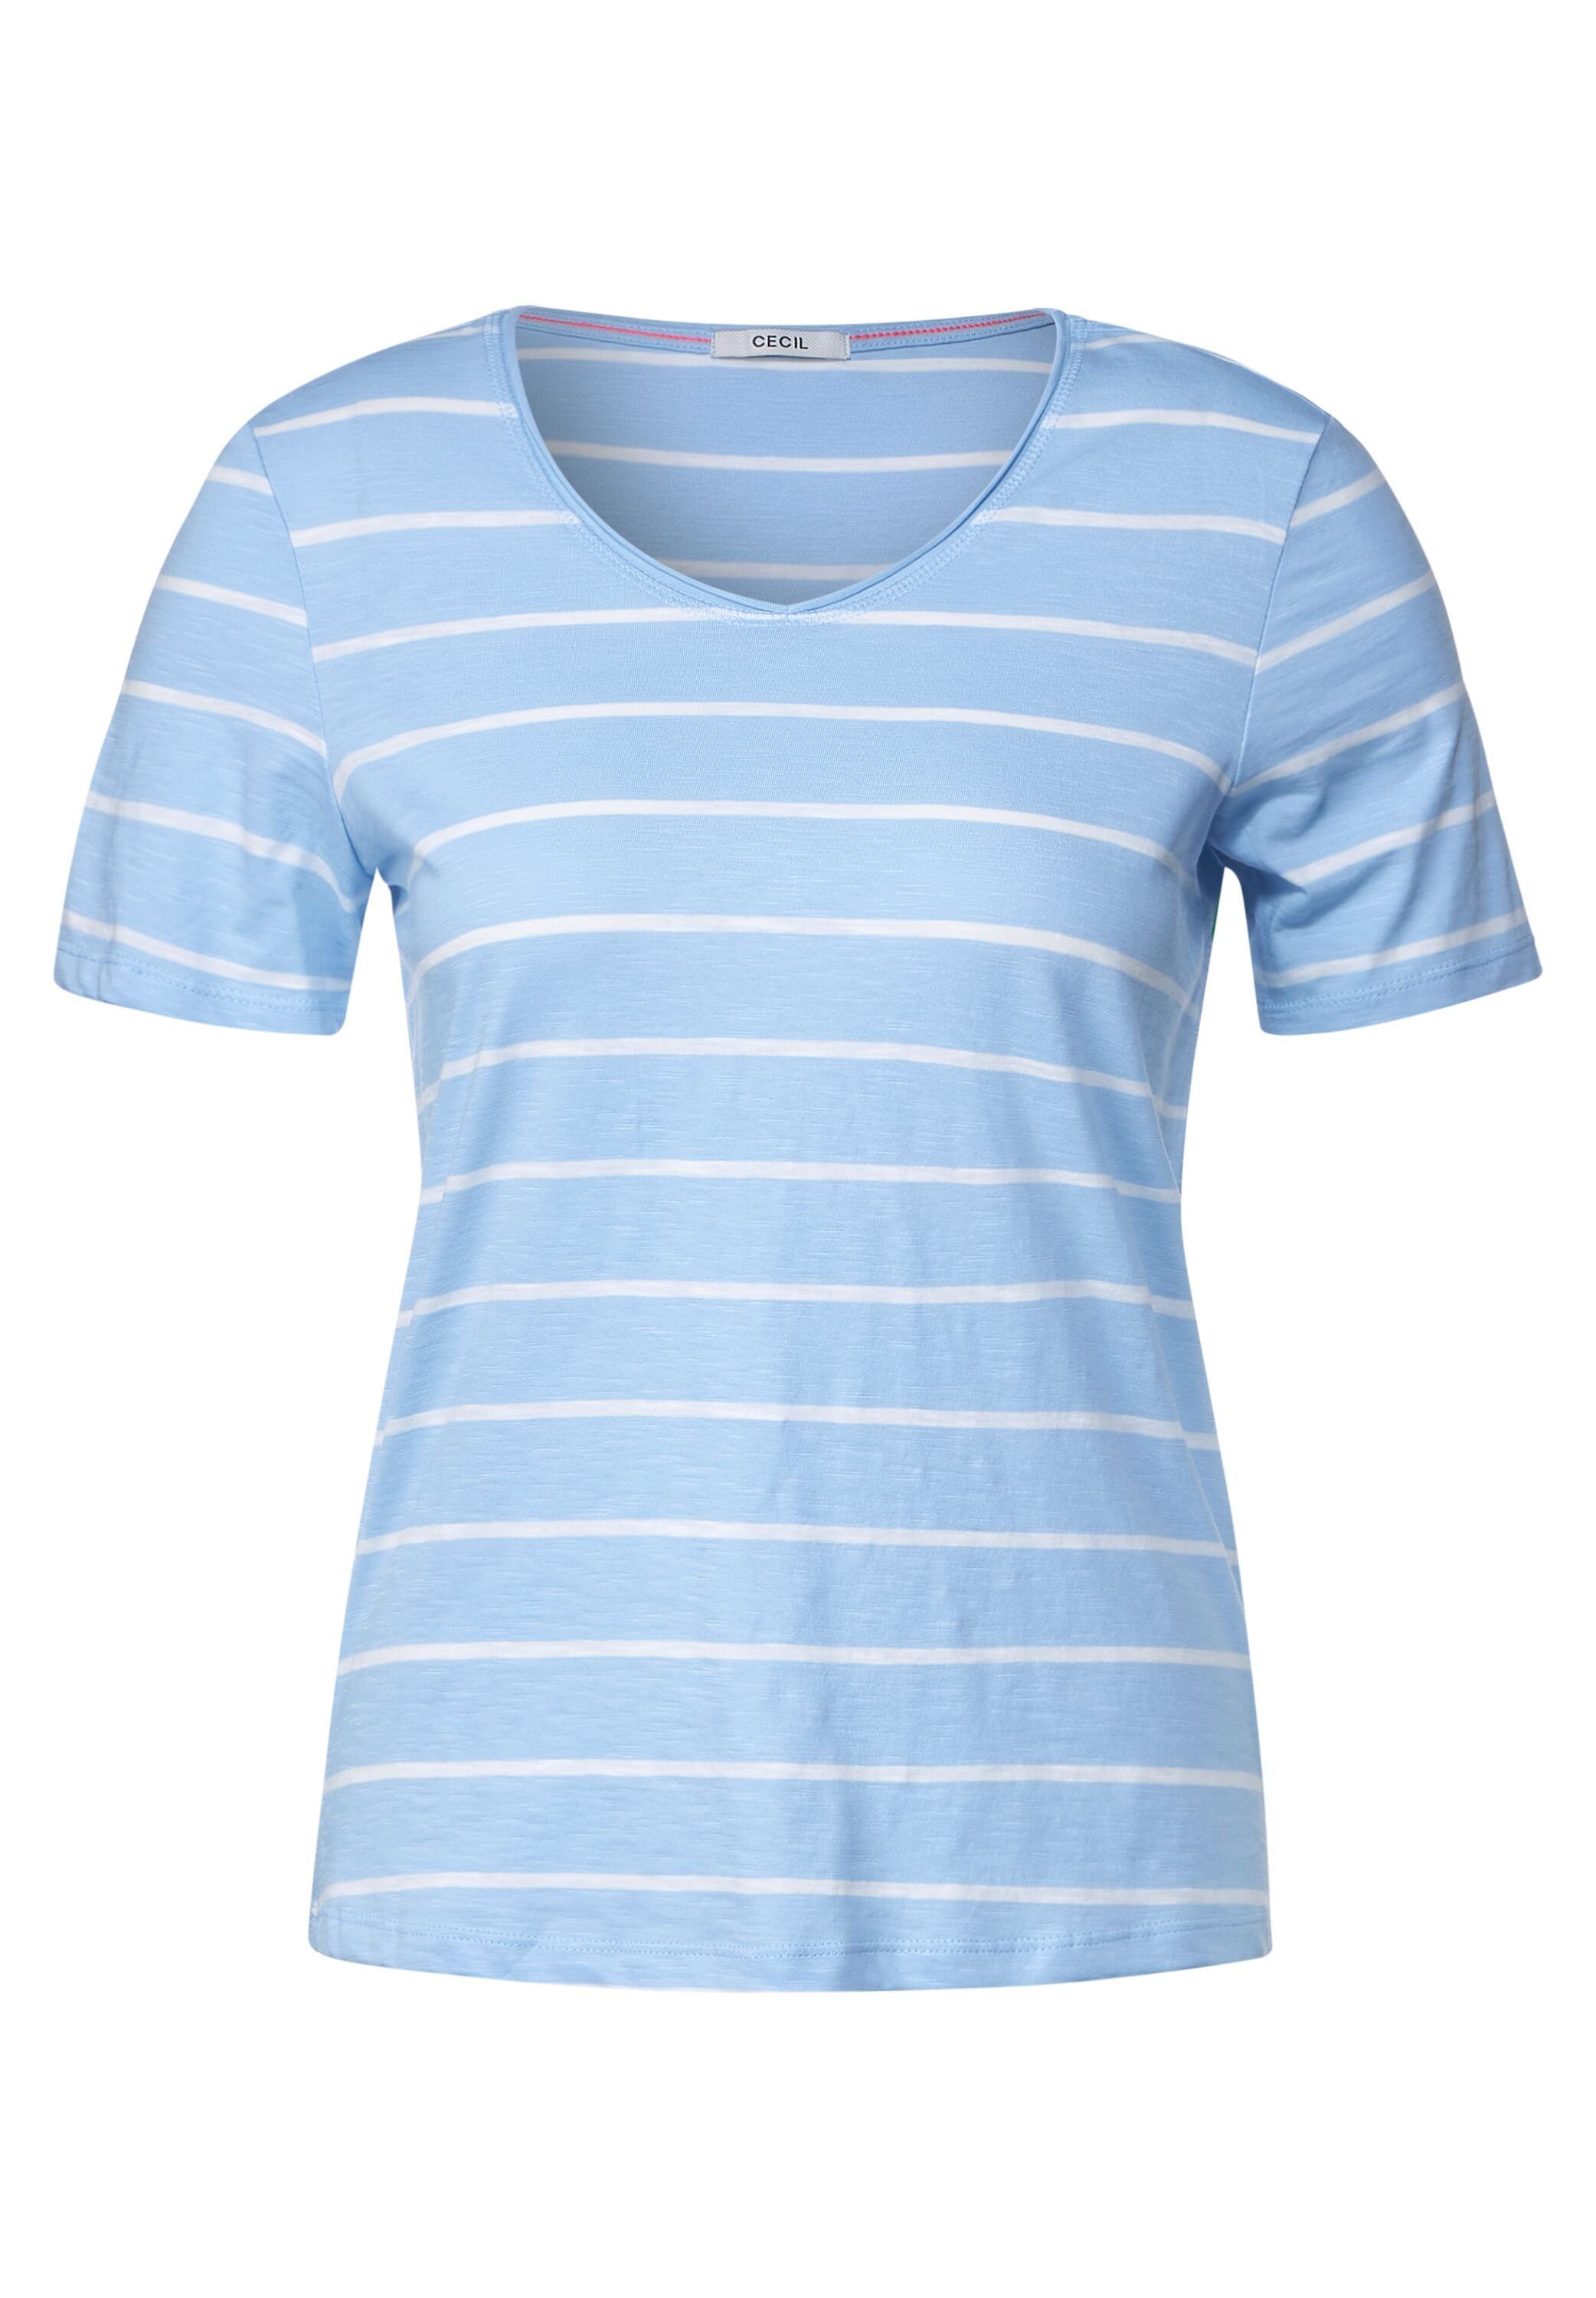 Cecil T-Shirt tranquil blue